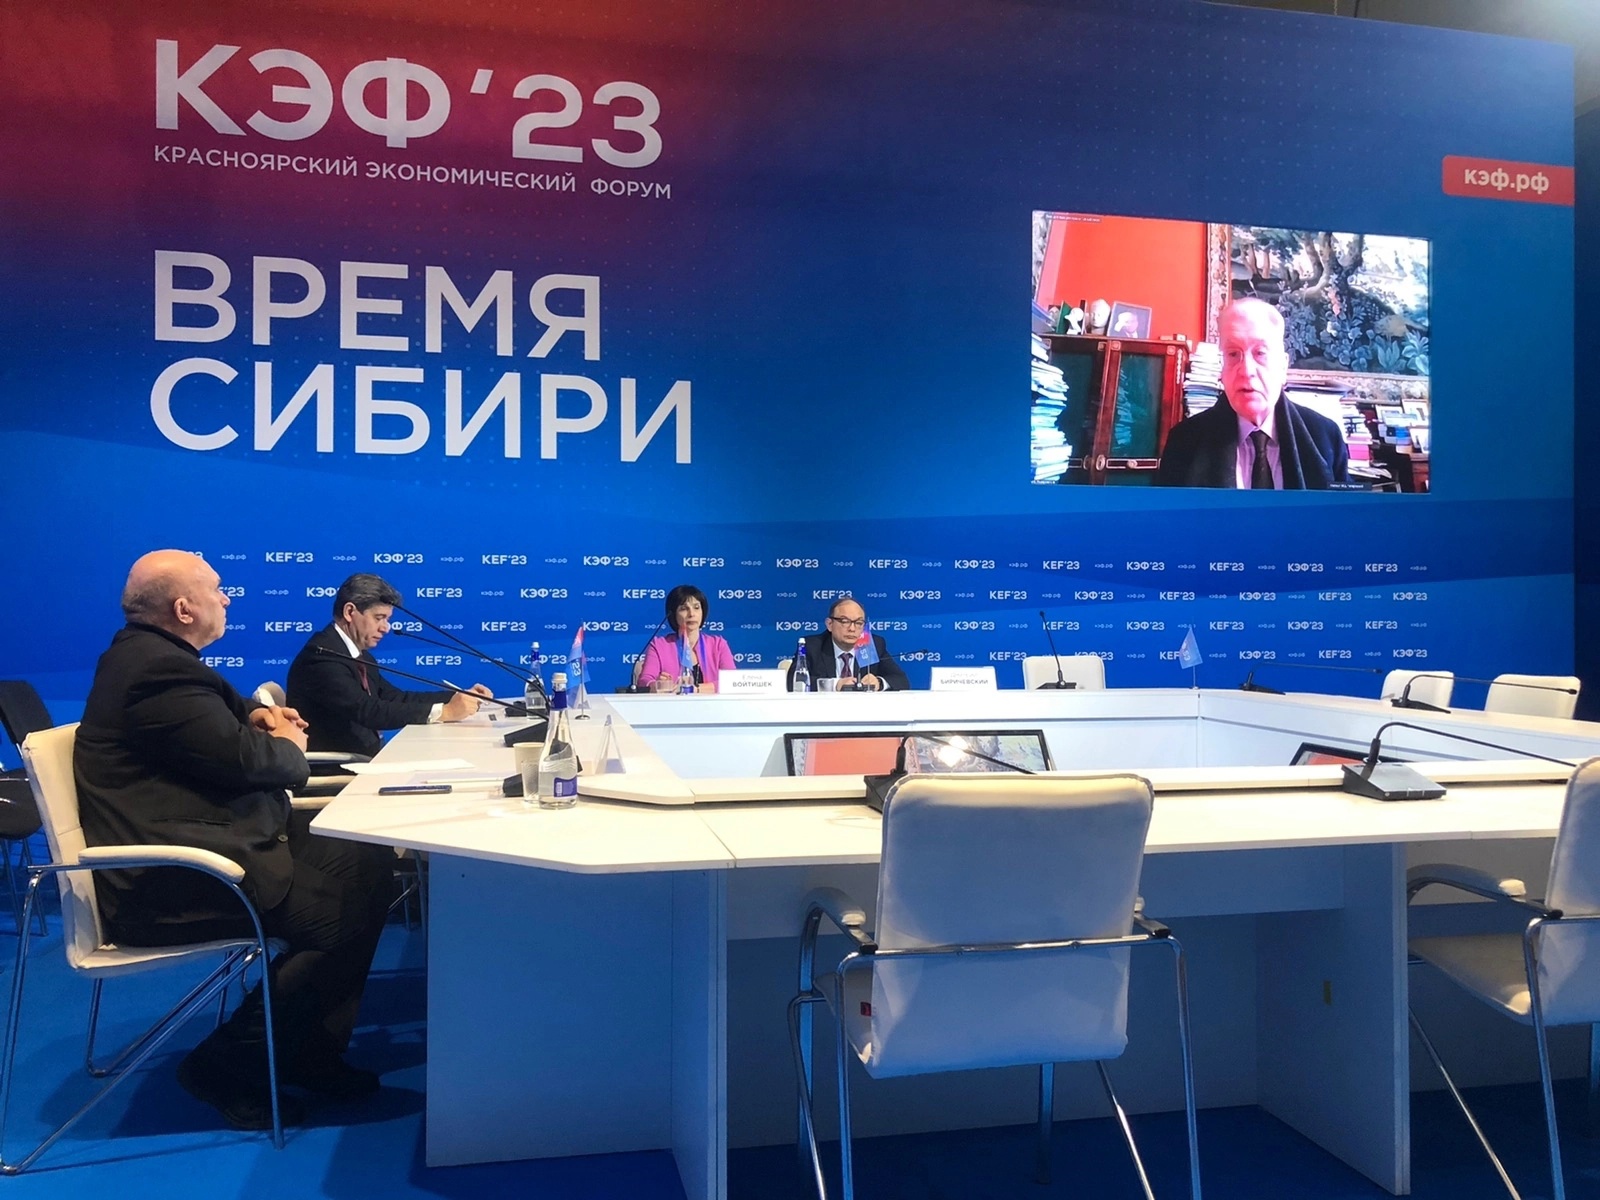 St Petersburg University Orientalists have an open dialogue at the Krasnoyarsk Economic Forum 2023